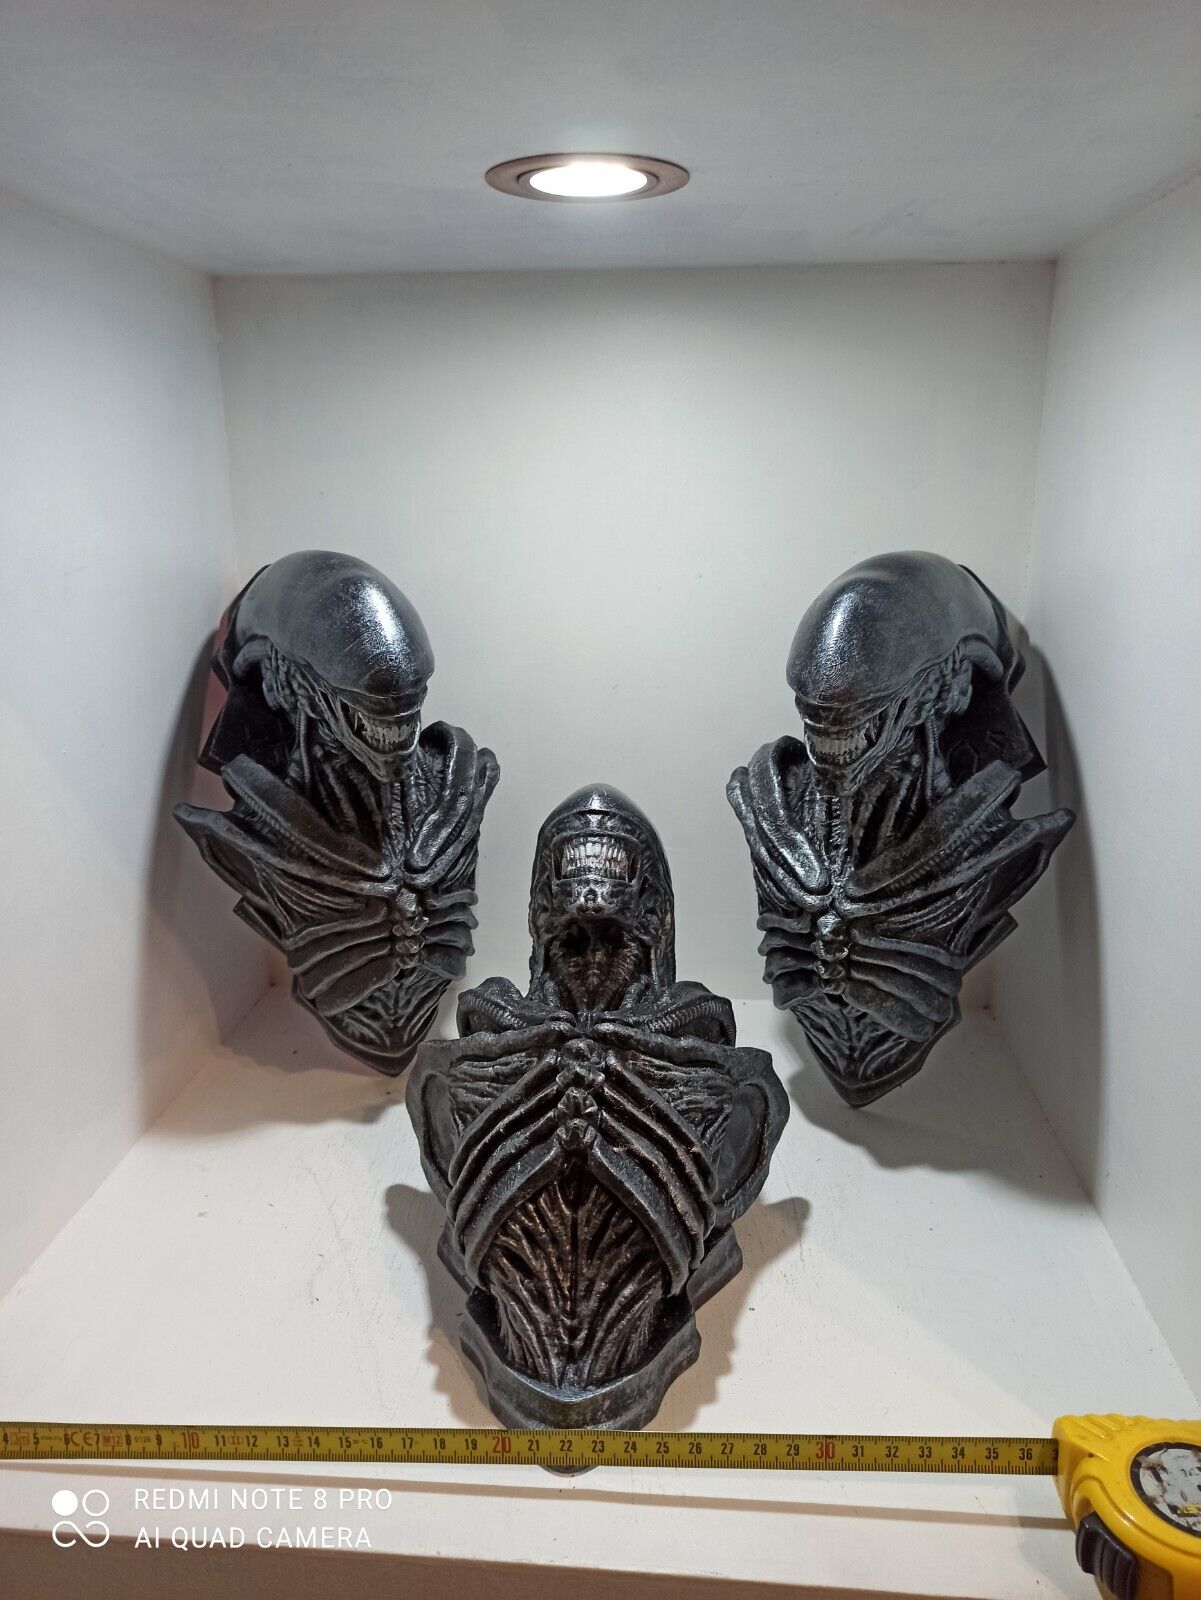 Xenomorph / Alien statue/wall mount decoration